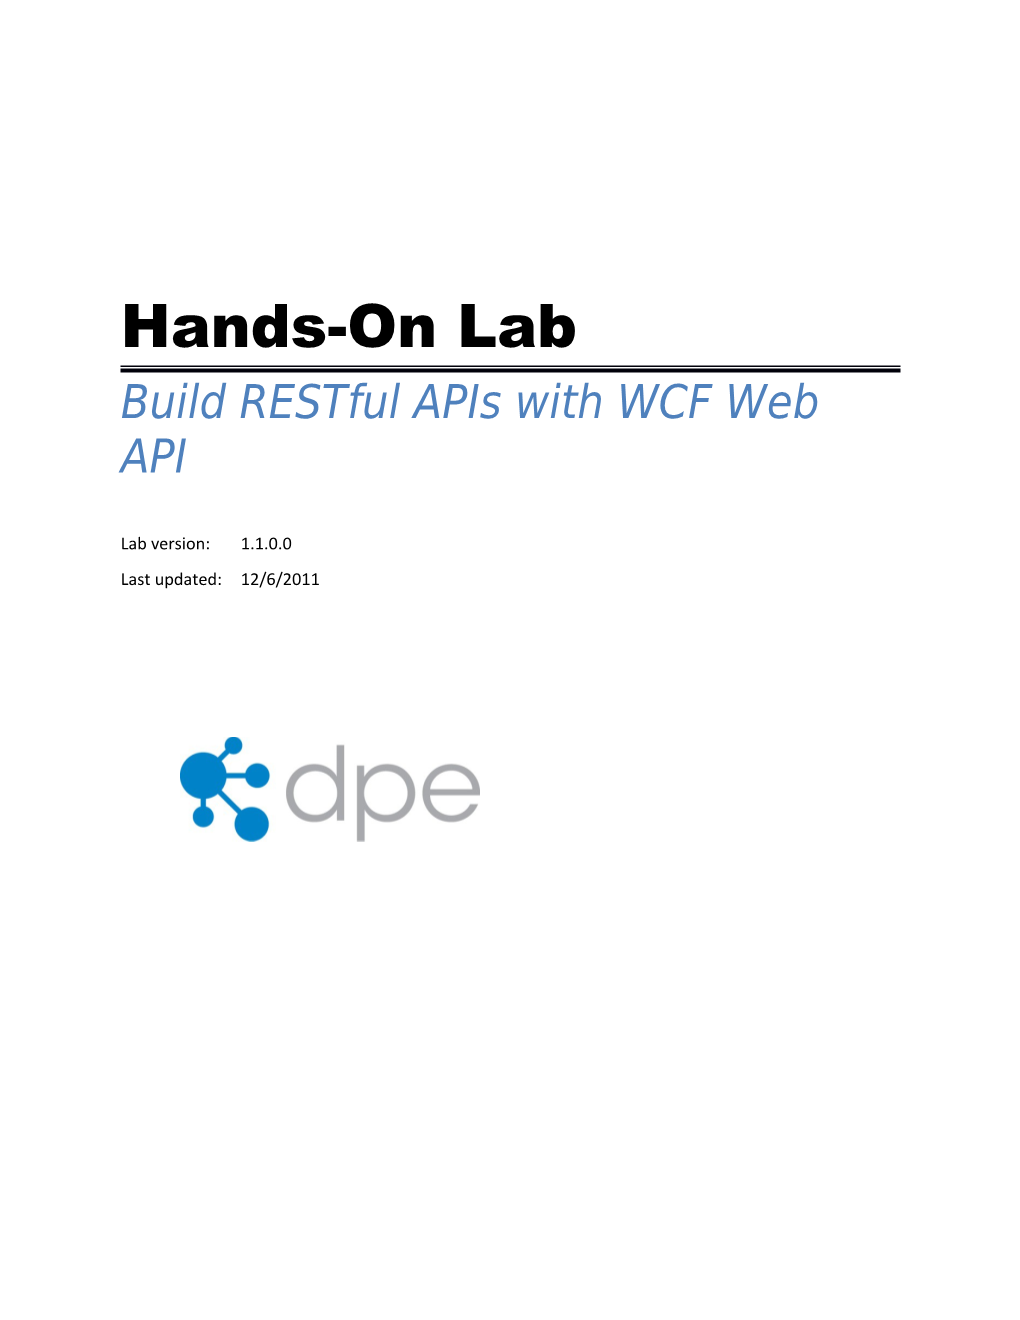 Build Restful Apis with WCF Web API